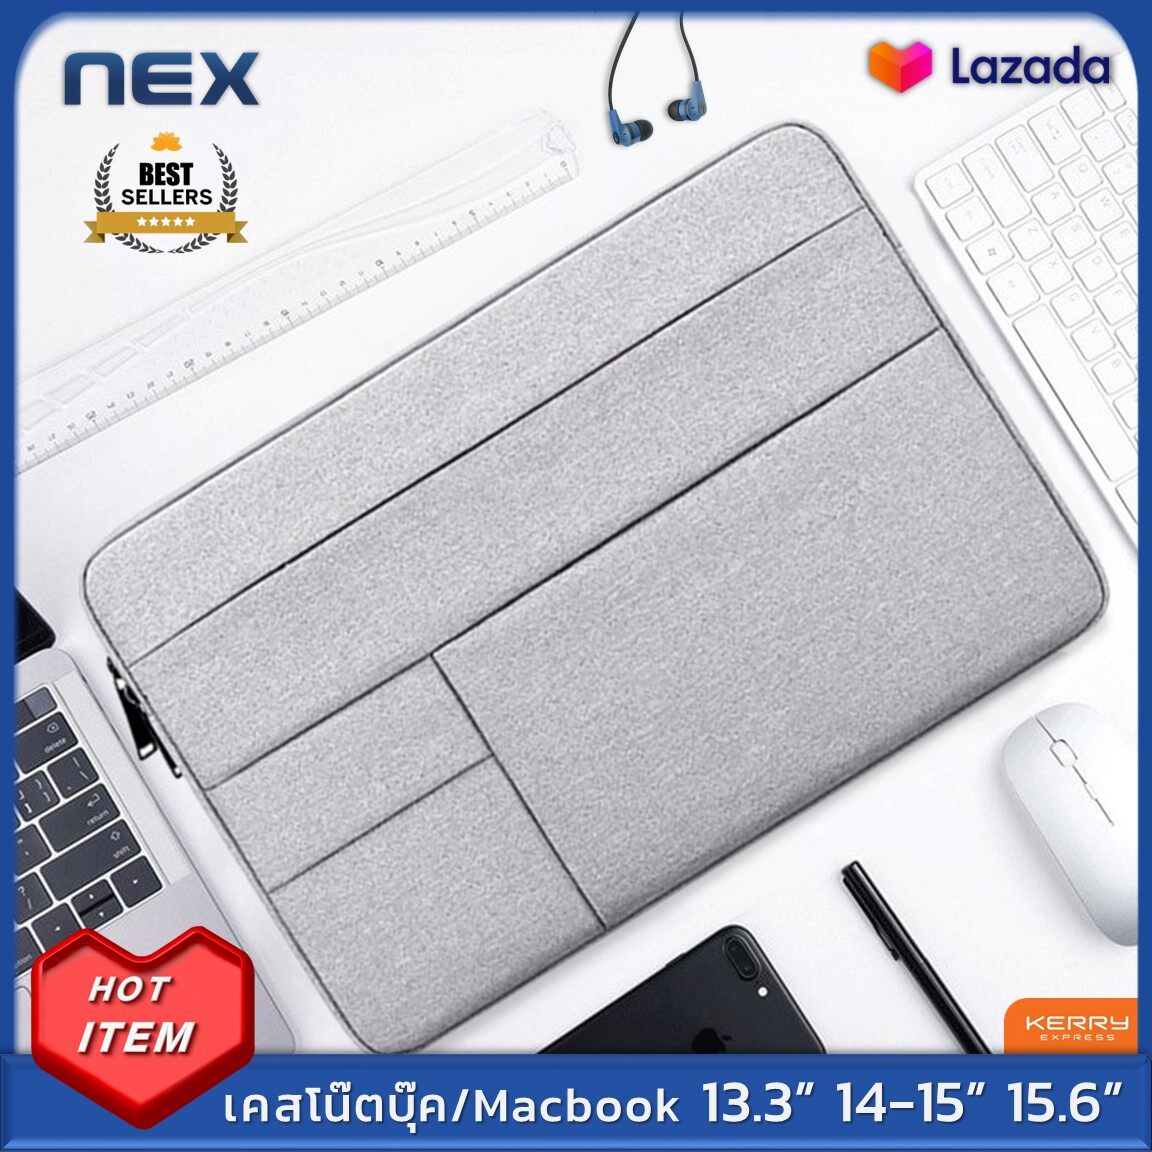 NEX  กระเป๋าใส่โน๊ตบุ๊ค 13.3, 14-15, 15.6นิ้ว Soft Case เคสMacbook Air Pro เคสโน๊ตบุ๊ค  ซองใส่โน๊ตบุ๊ค ซองแล็ปท็อป   Laptop Bag  Macbook Sleeve Case 13.3, 14-15, 15.6 inch